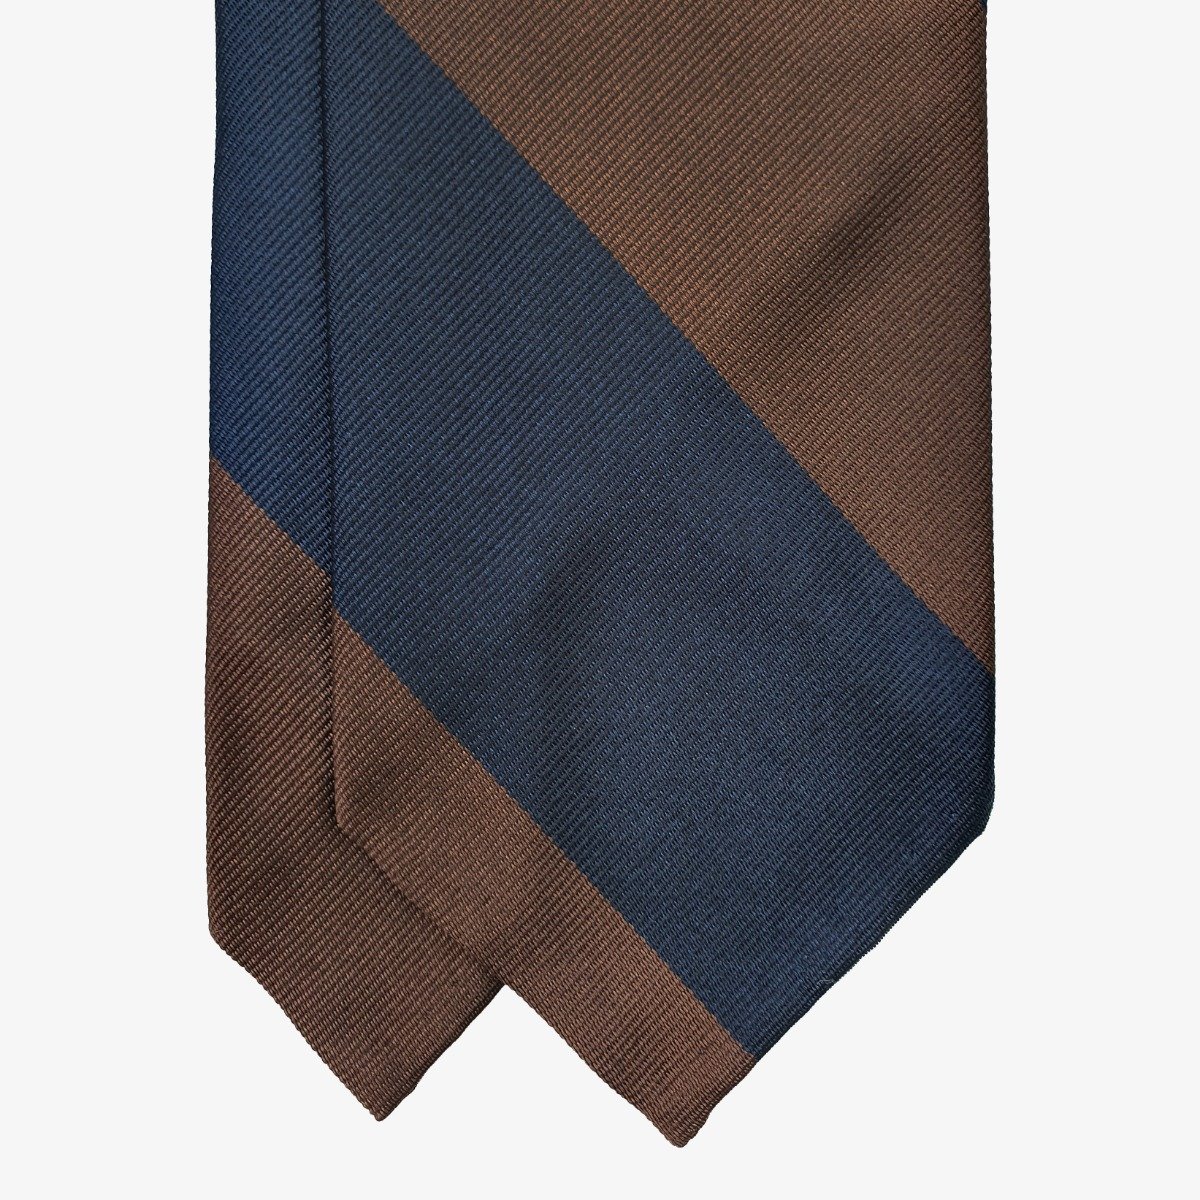 Shibumi Firenze navy and brown repp striped silk tie